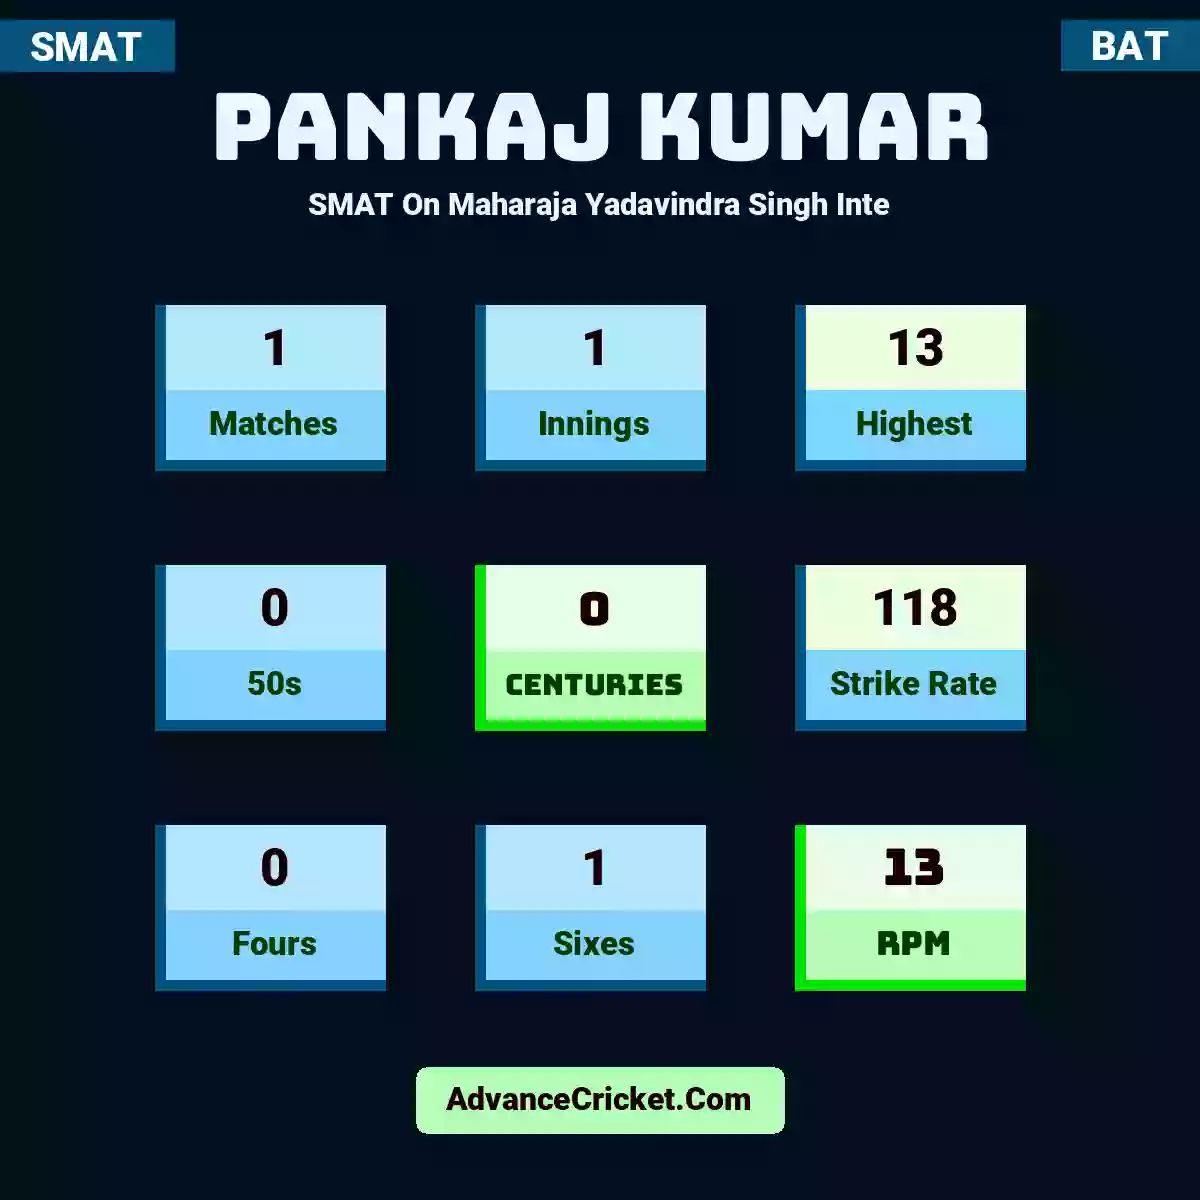 Pankaj Kumar SMAT  On Maharaja Yadavindra Singh Inte, Pankaj Kumar played 1 matches, scored 13 runs as highest, 0 half-centuries, and 0 centuries, with a strike rate of 118. P.Kumar hit 0 fours and 1 sixes, with an RPM of 13.